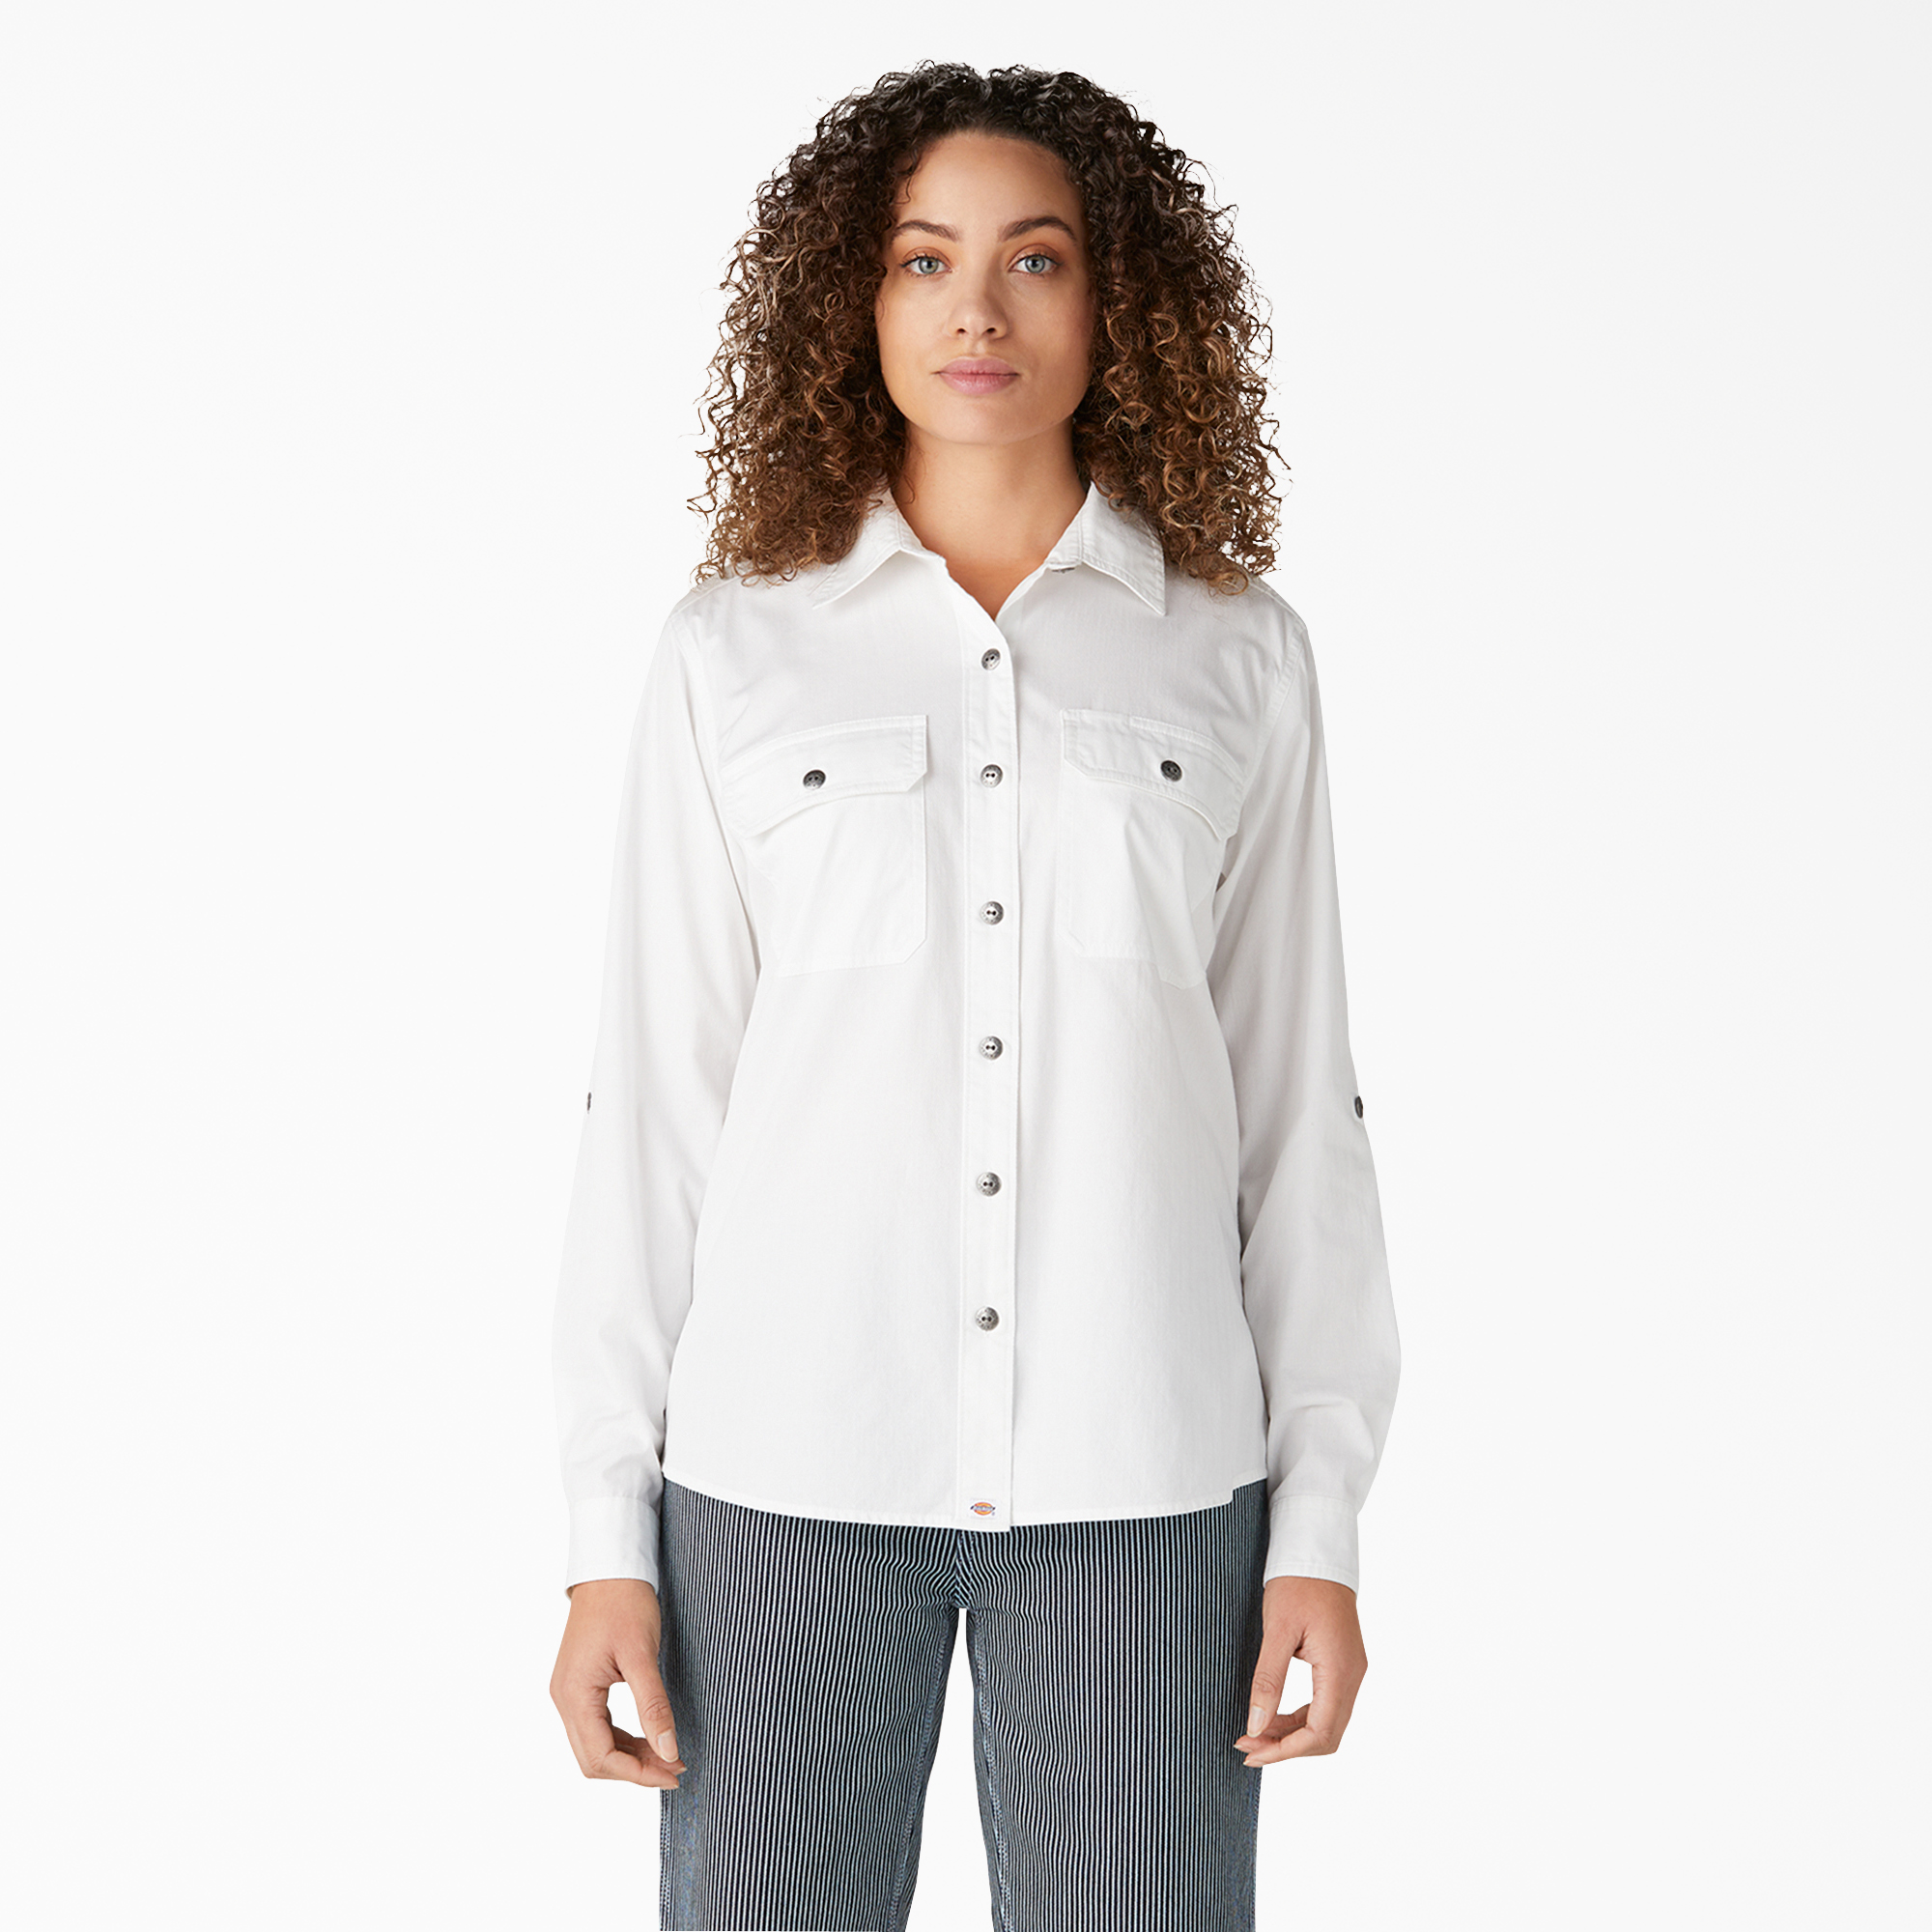 Women’s Long Sleeve Roll-Tab Work Shirt - White (WH)